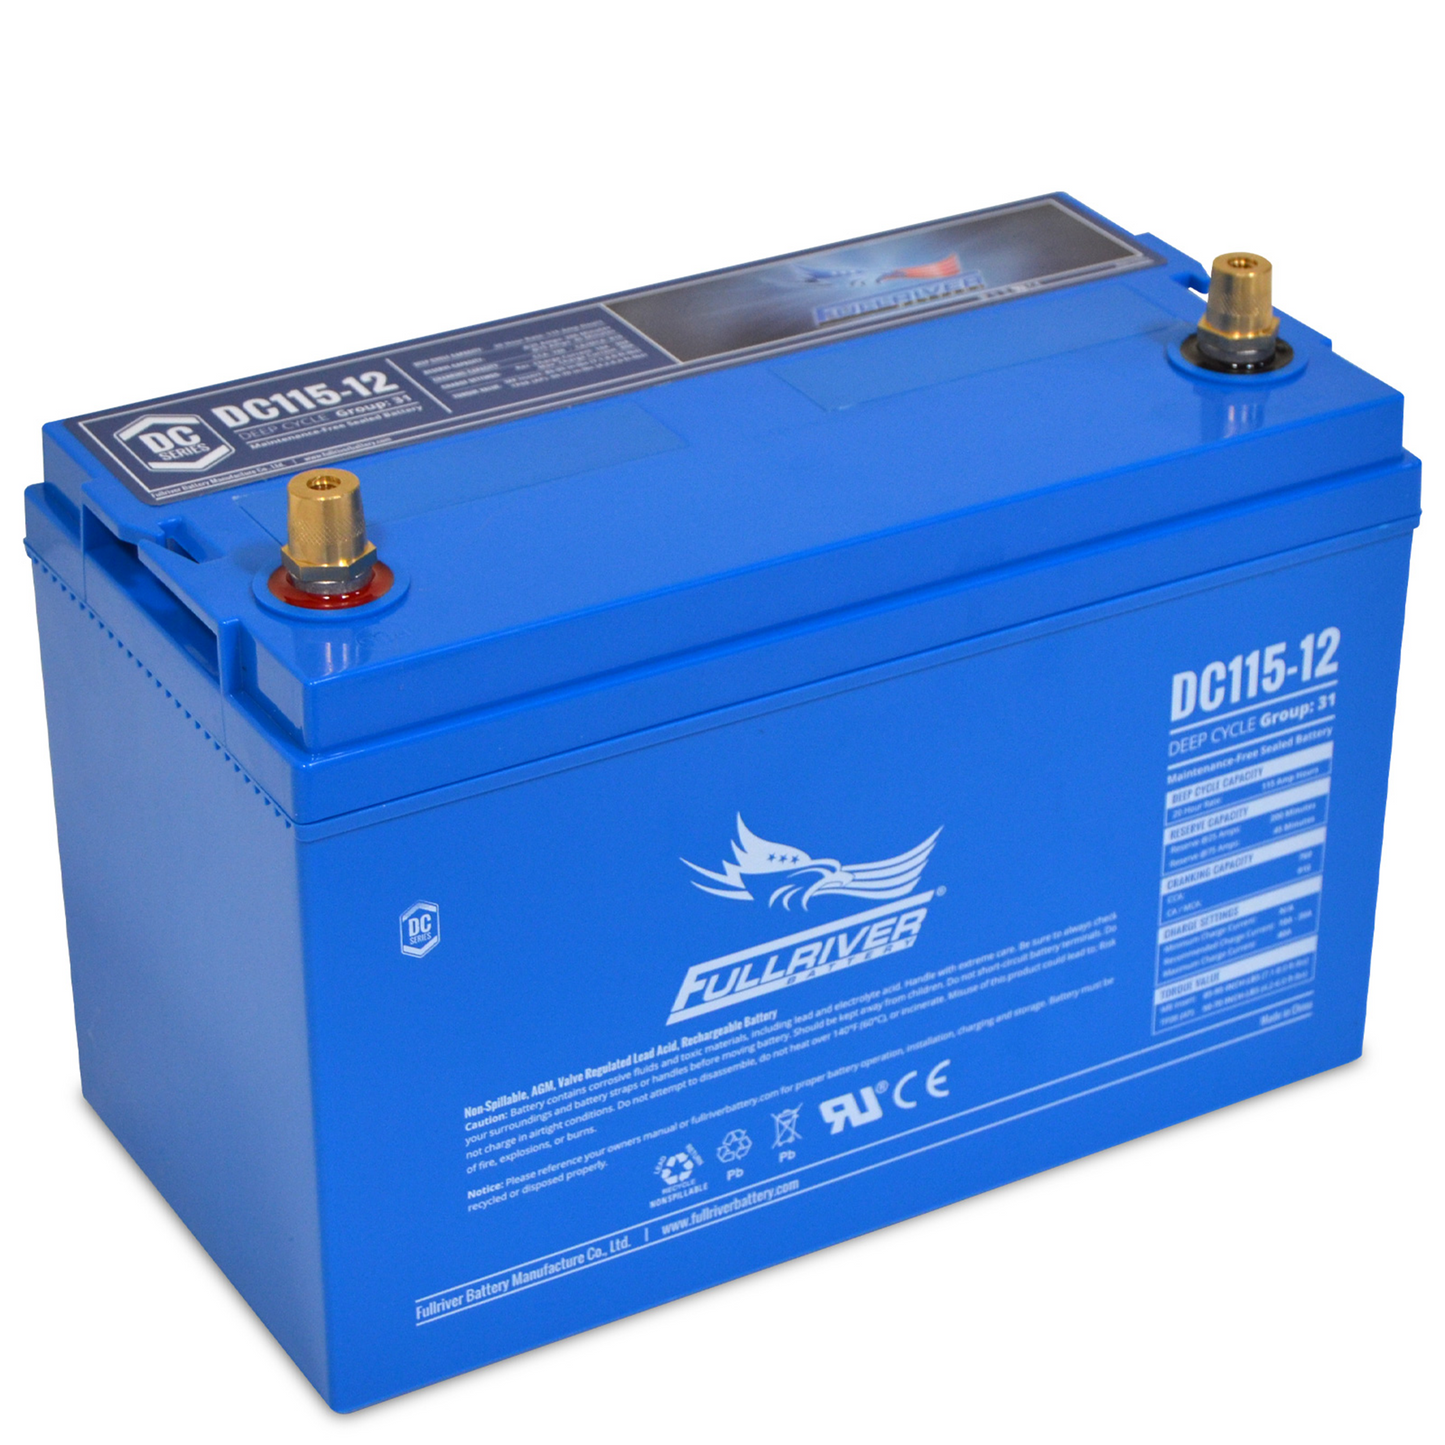 DC Series Battery 12V 115Ah Battery (DC115-12)